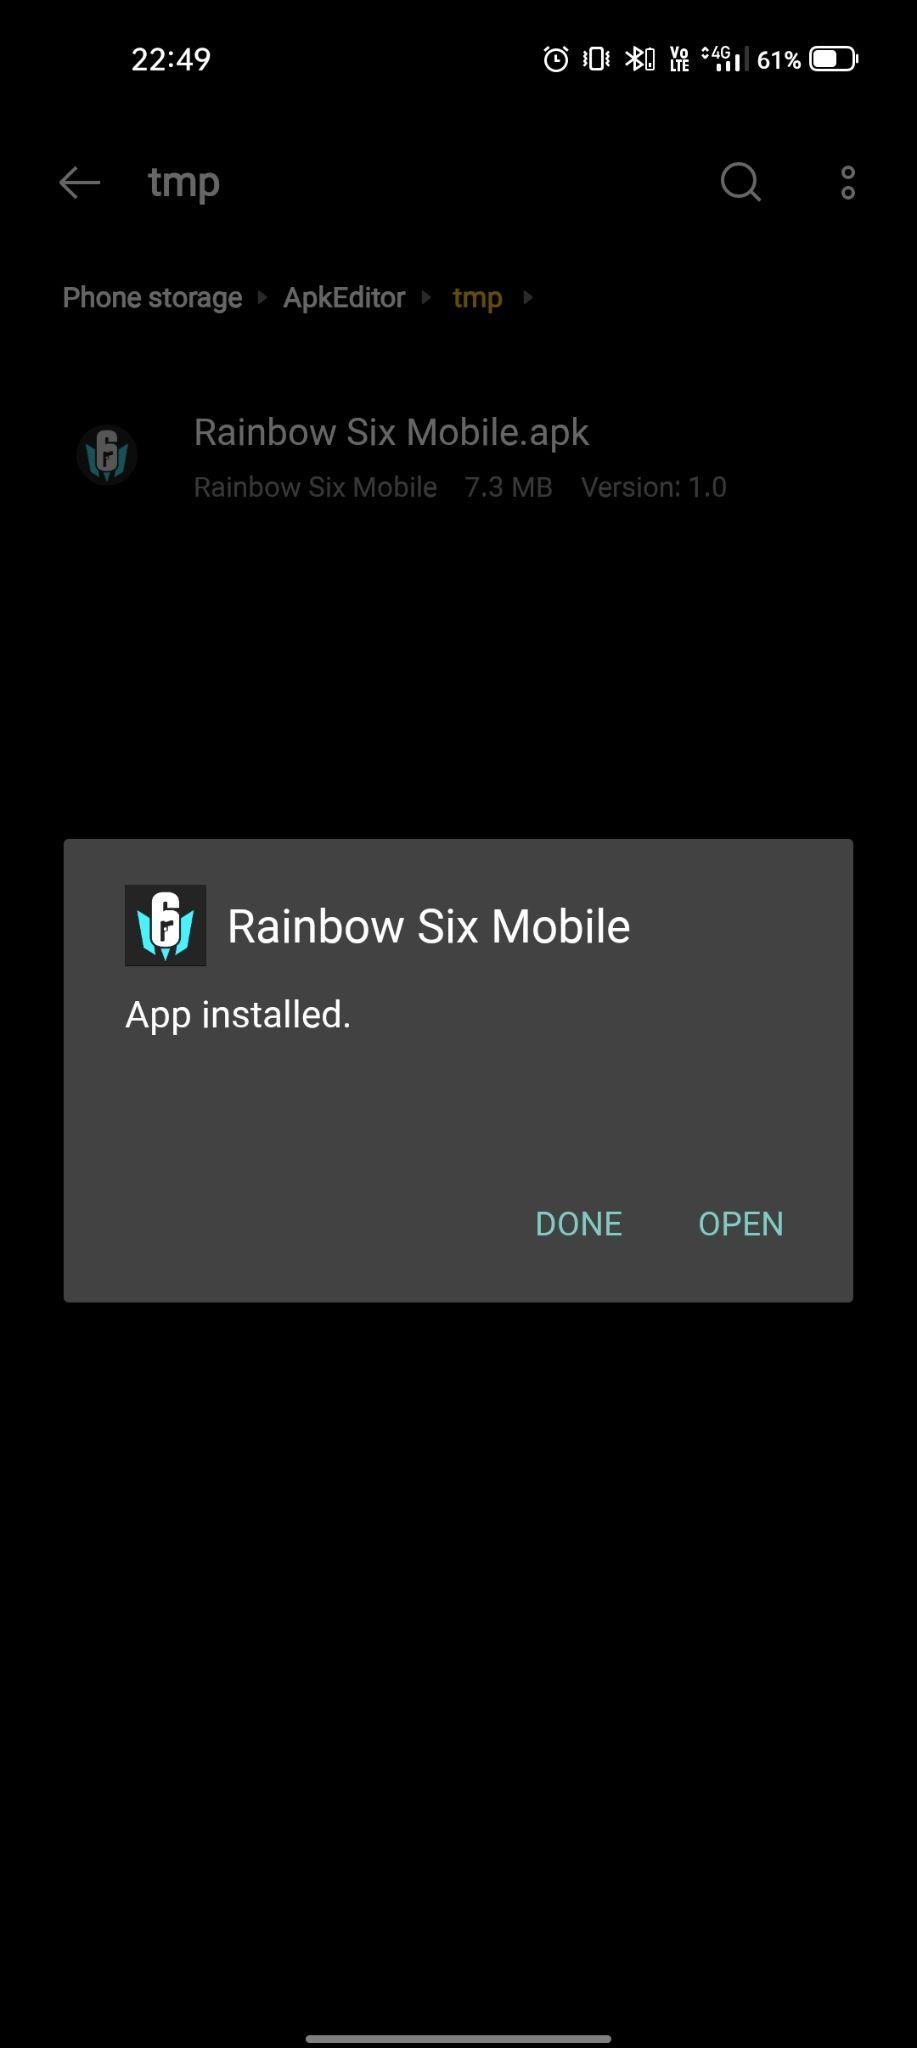 rainbox six mobile apk installed